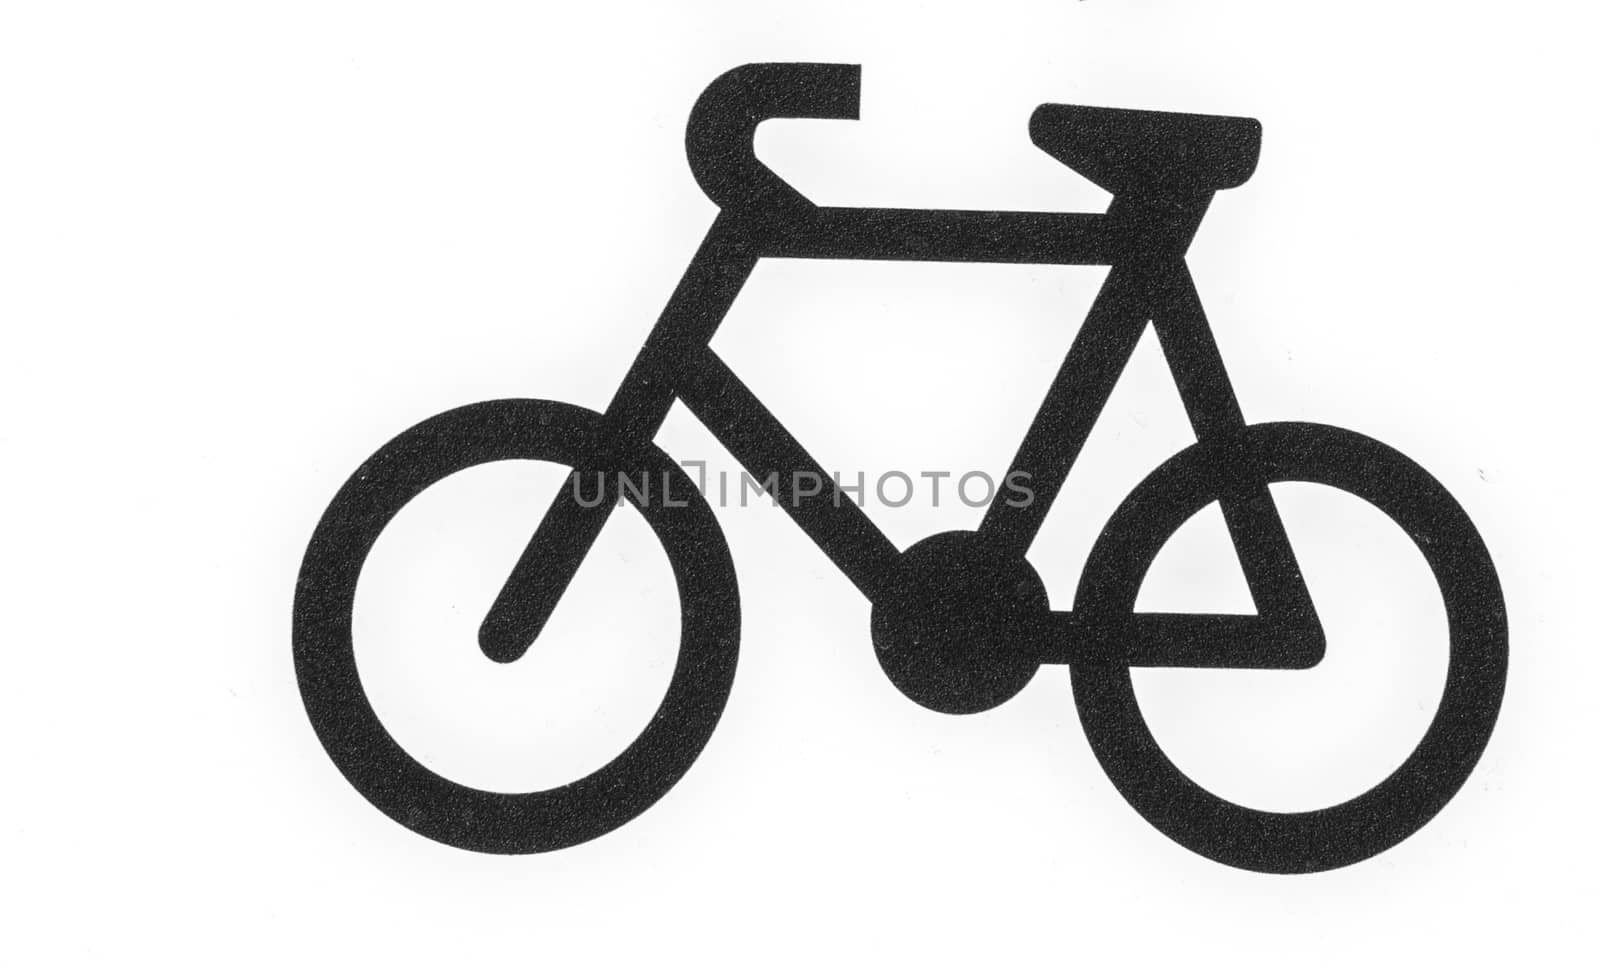 Bicycle lane road - square white bike cycling sign